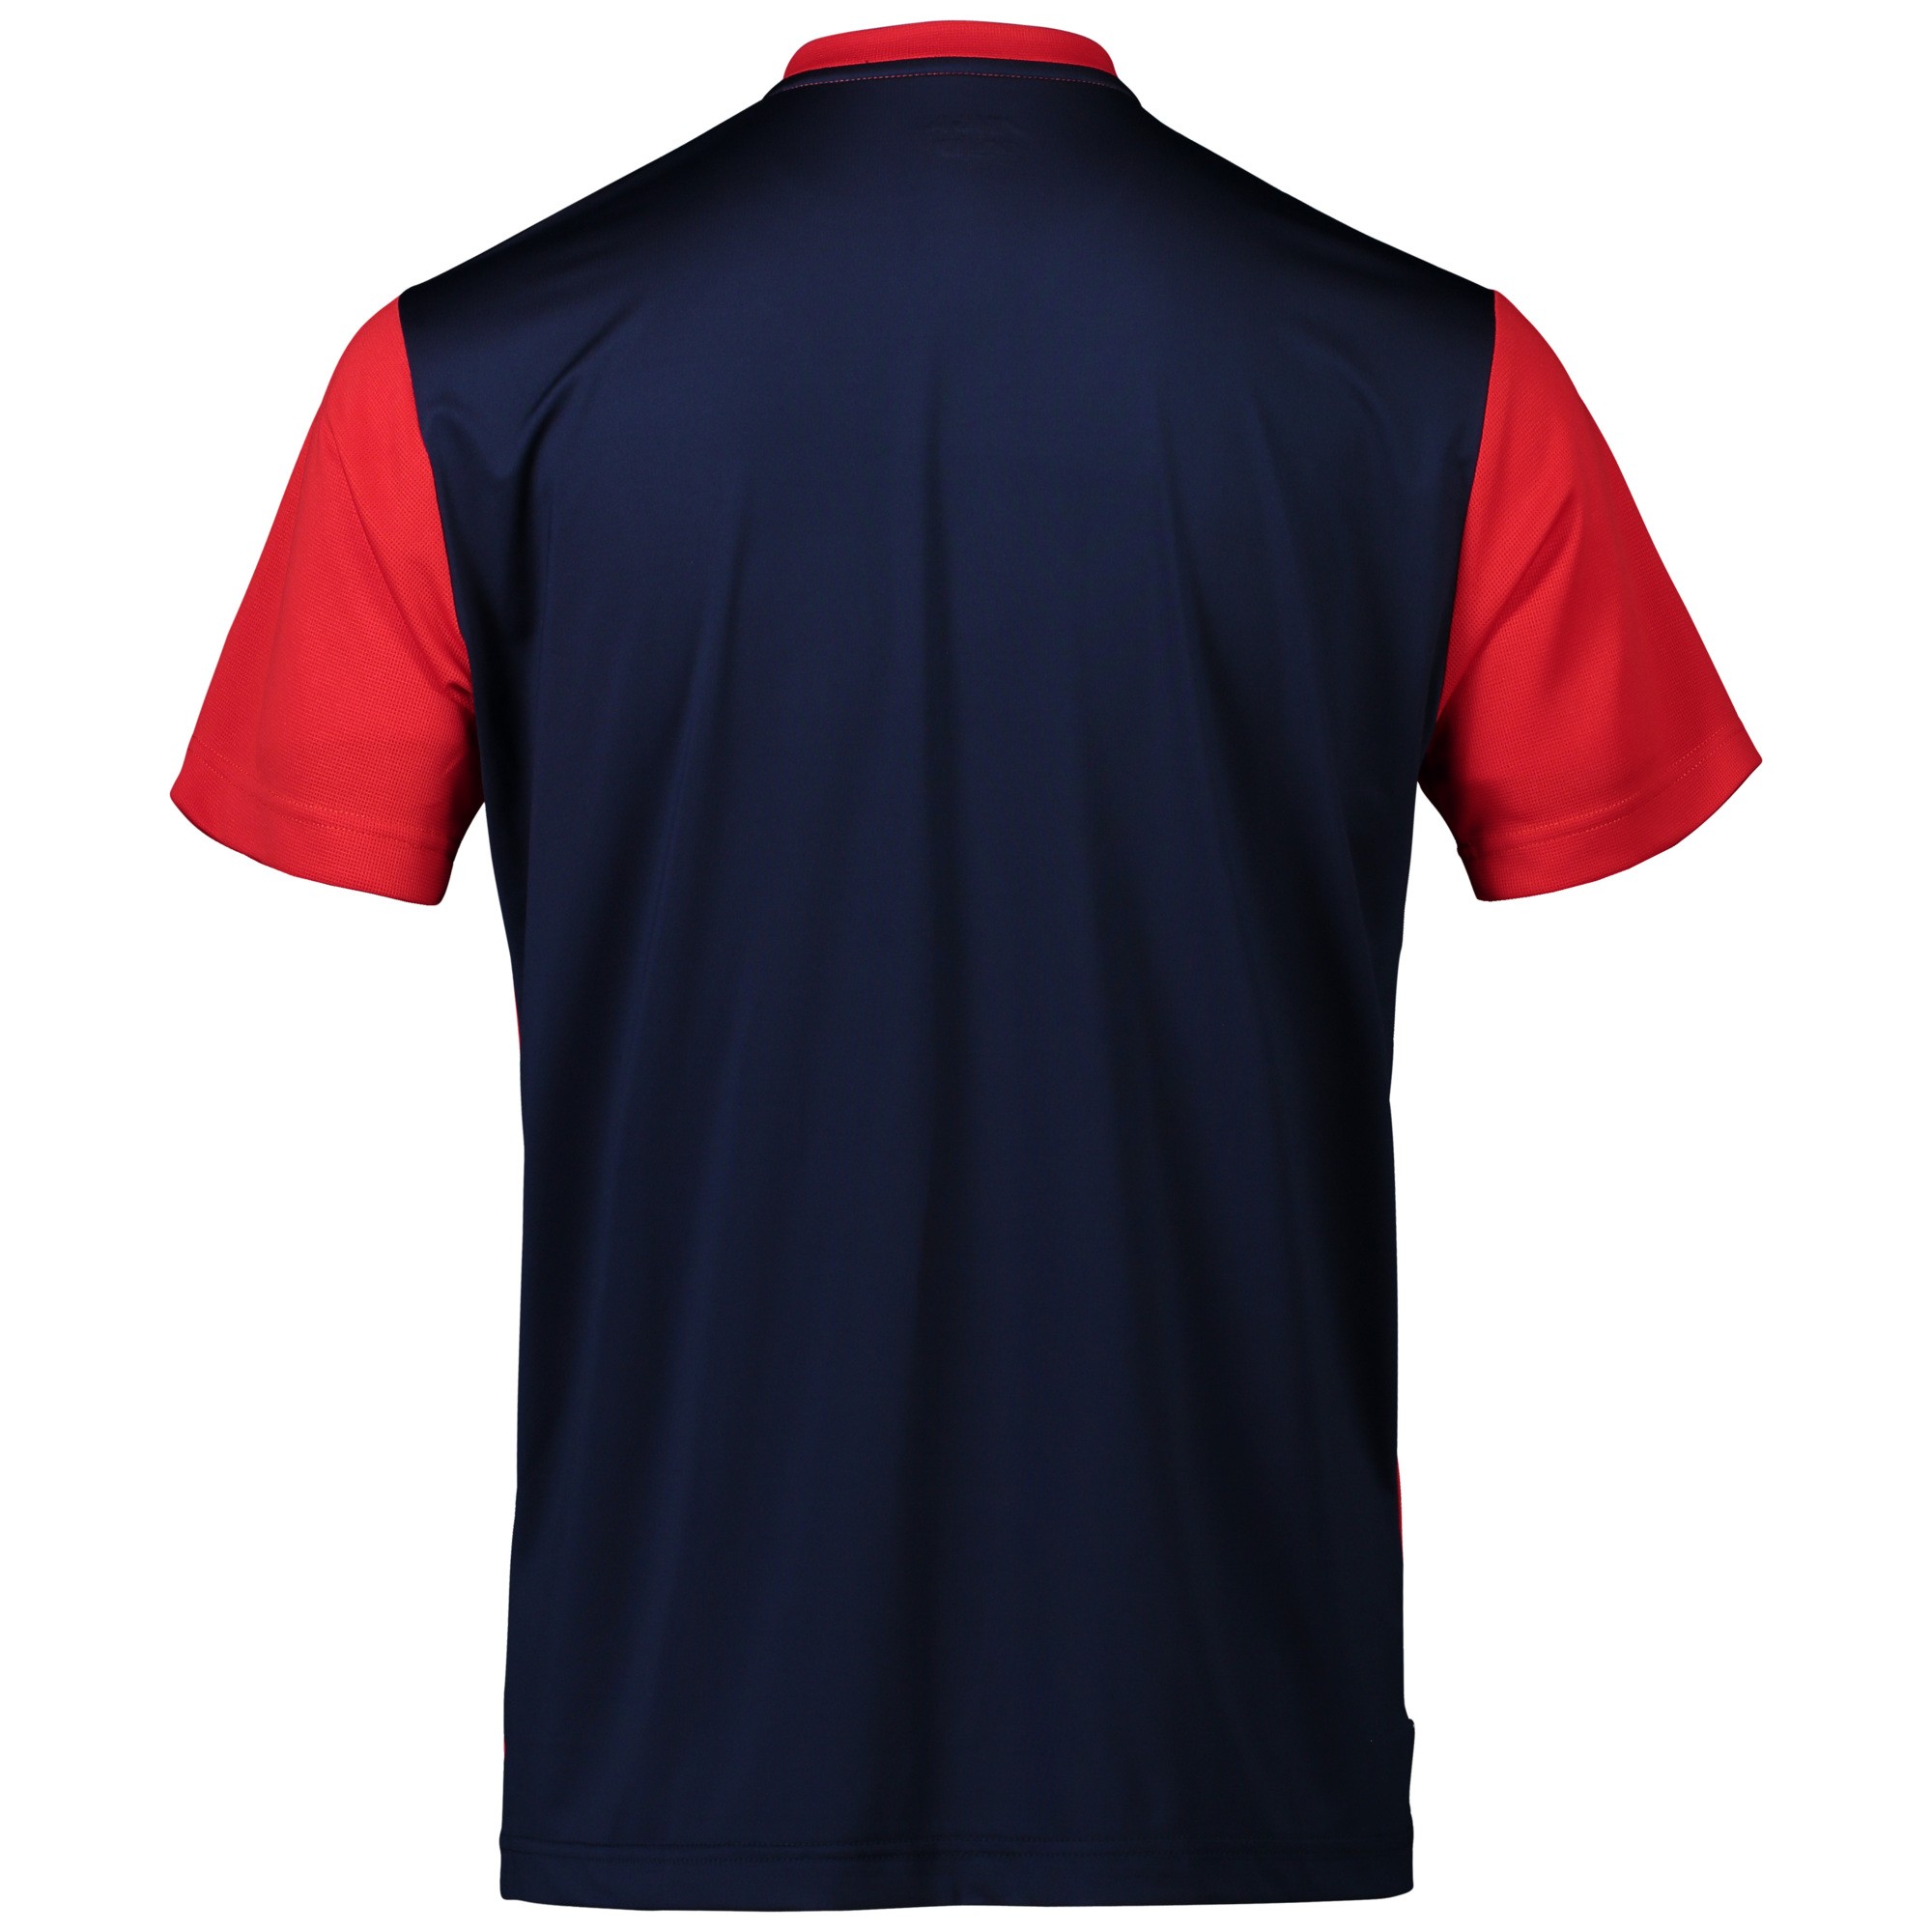 Stiga Shirt Club red | Tabletennis11.com (TT11)